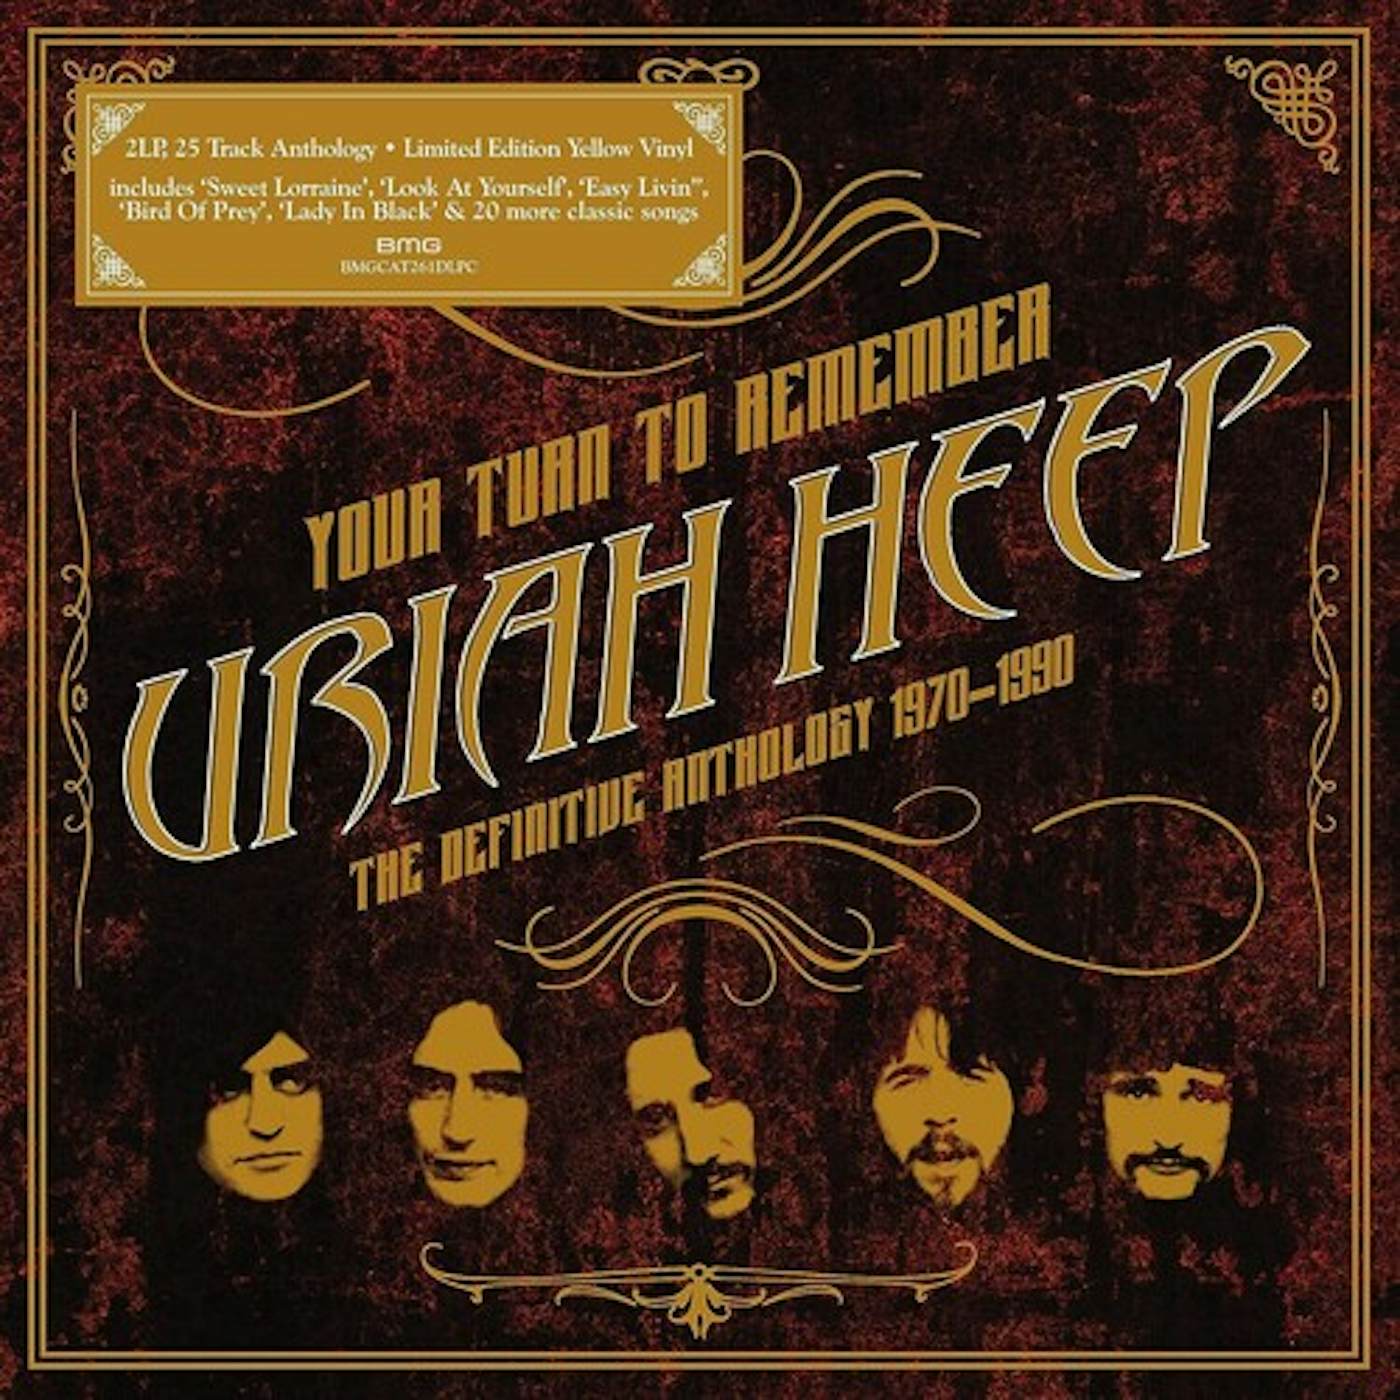 Uriah Heep Definitive Anthology 1970-1990 Vinyl Record